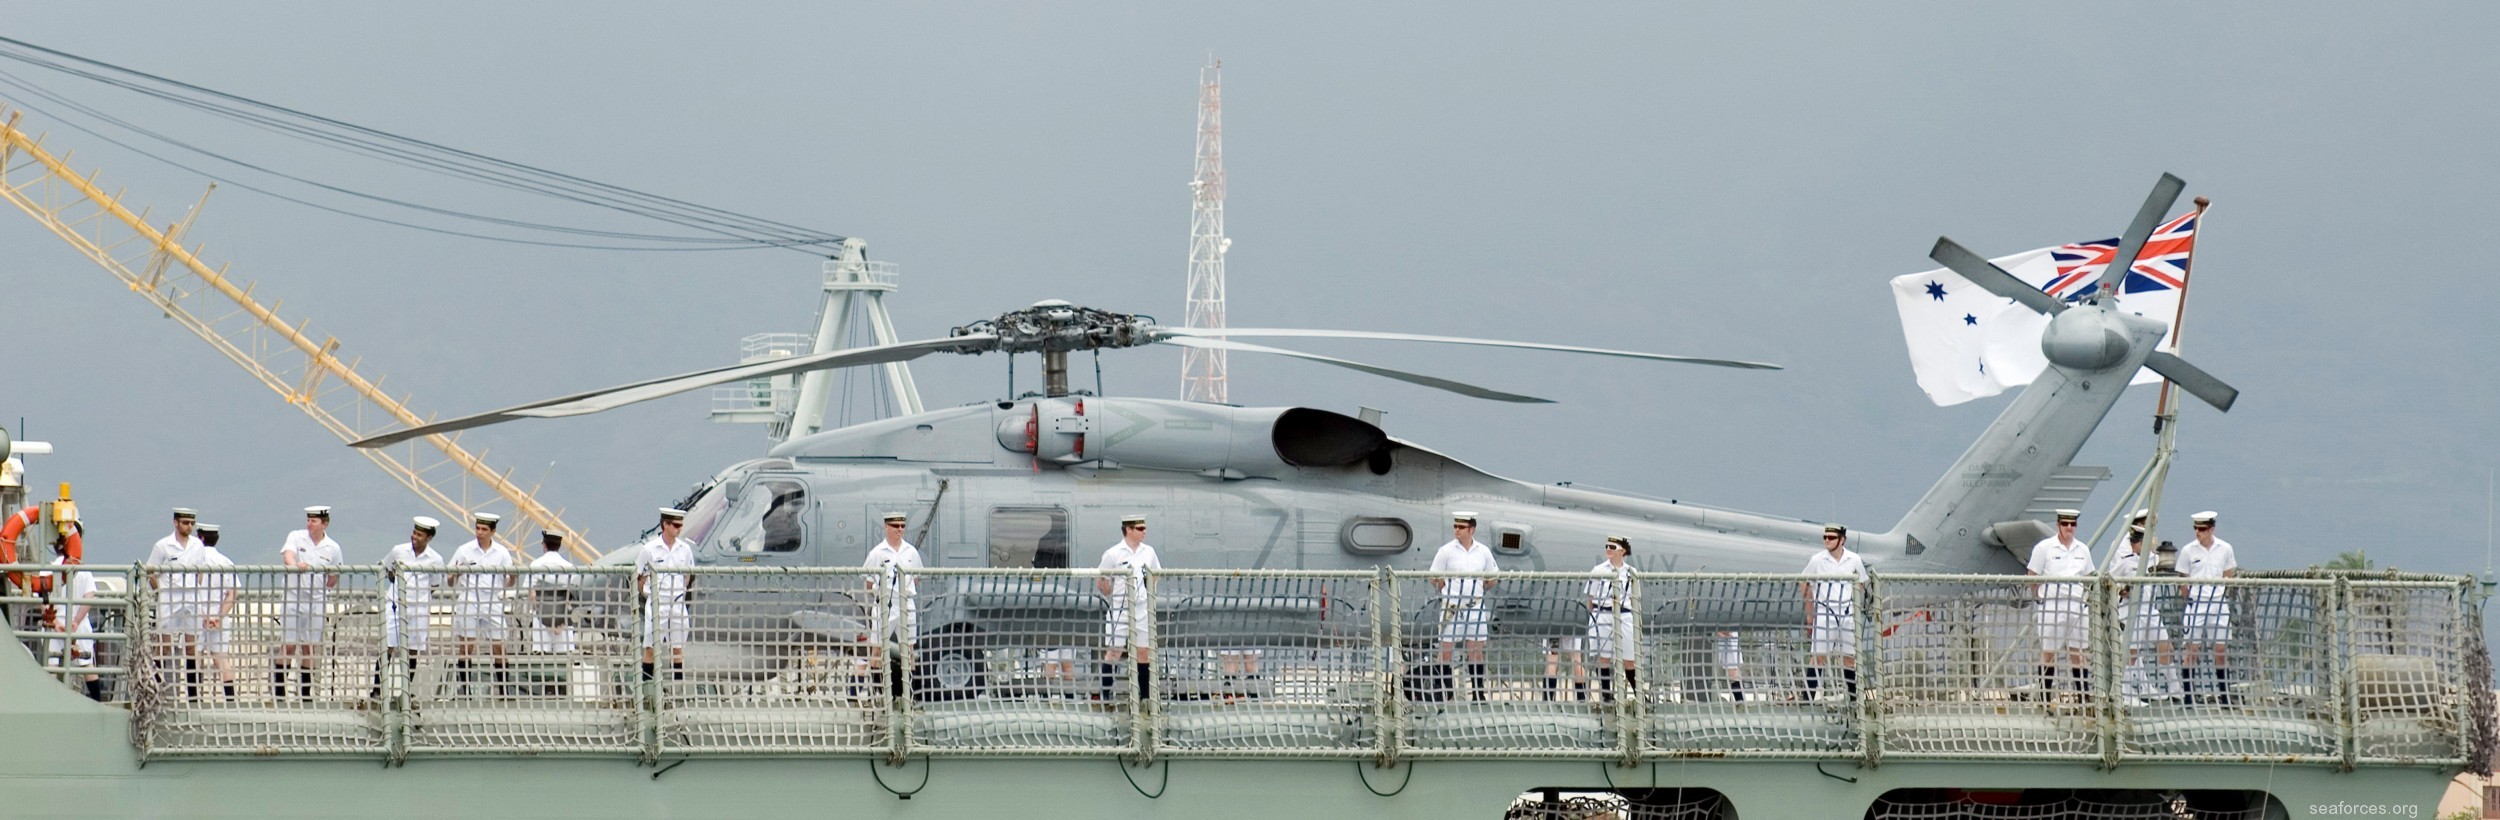 ffh-150 hmas anzac frigate royal australian navy 05 sikorsky s-70 helicopter